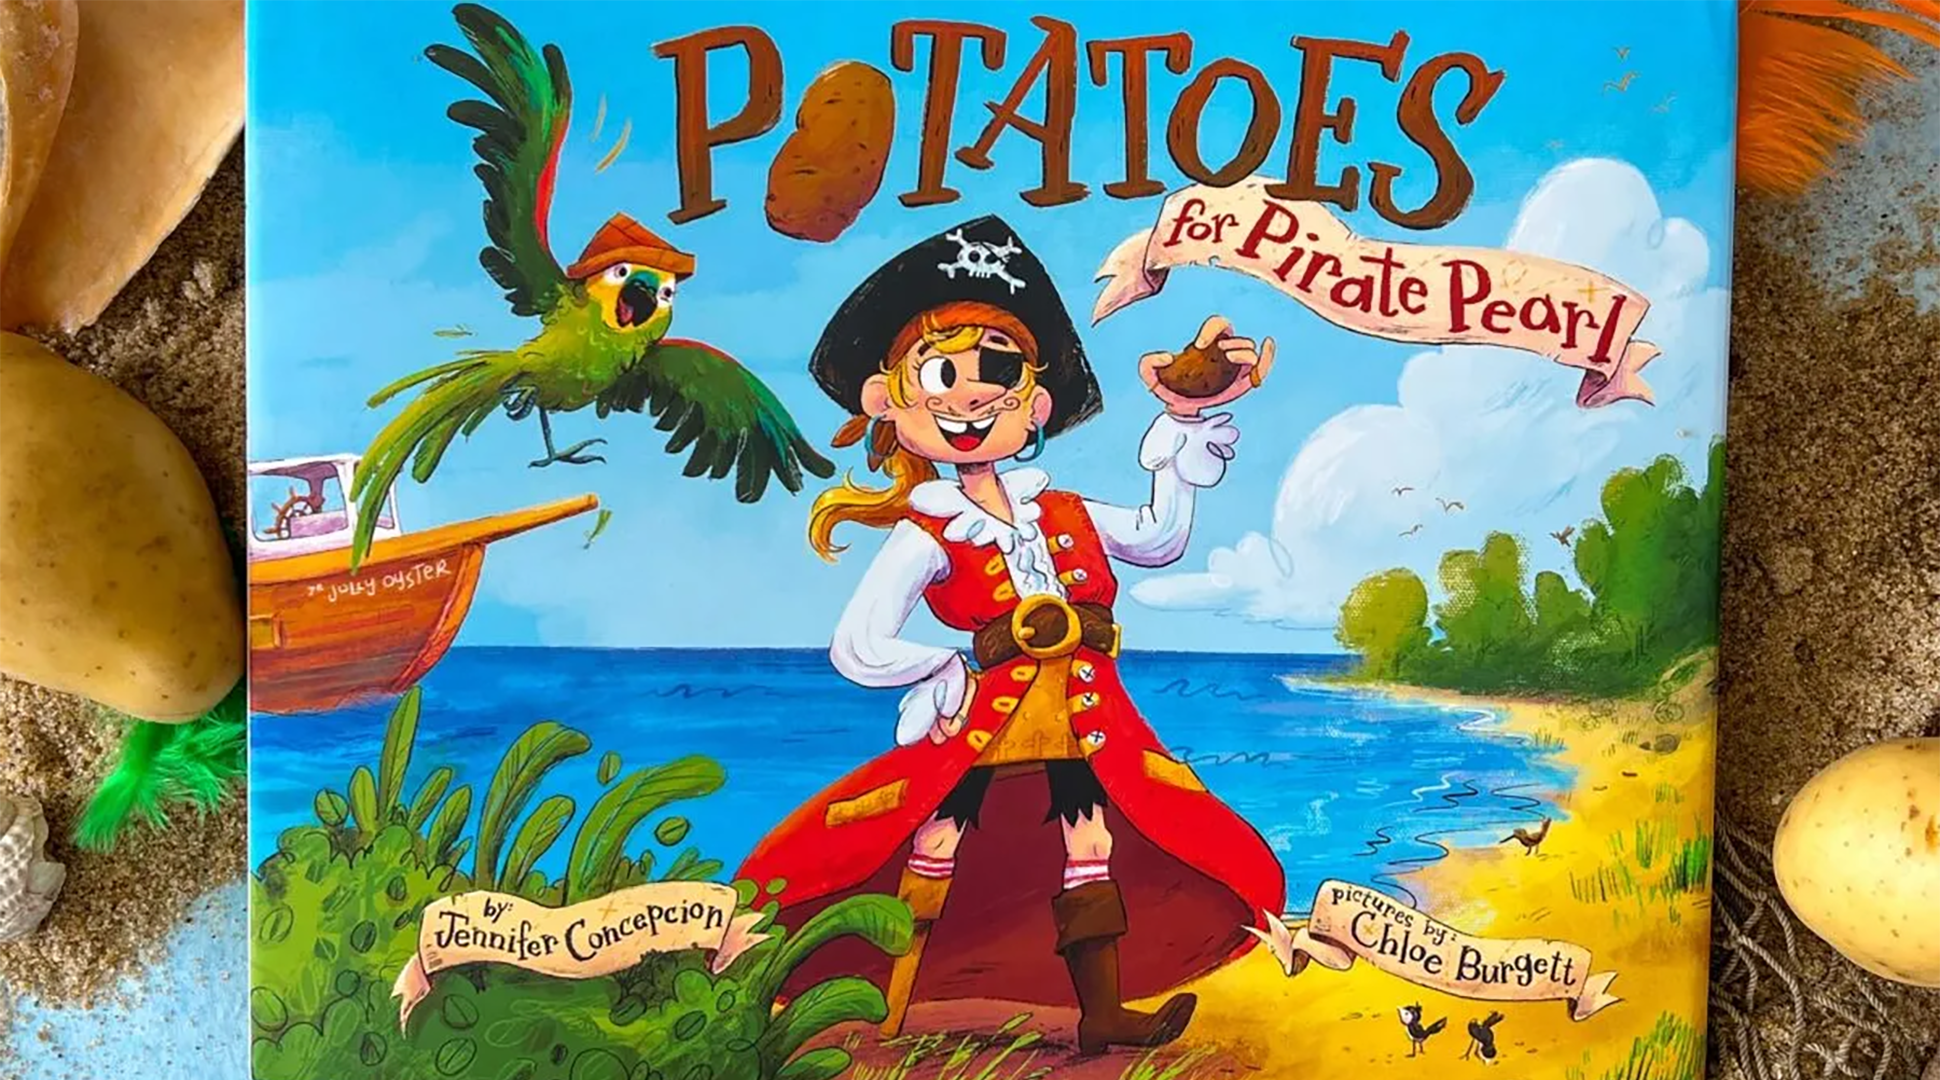 Potatoes and pirates